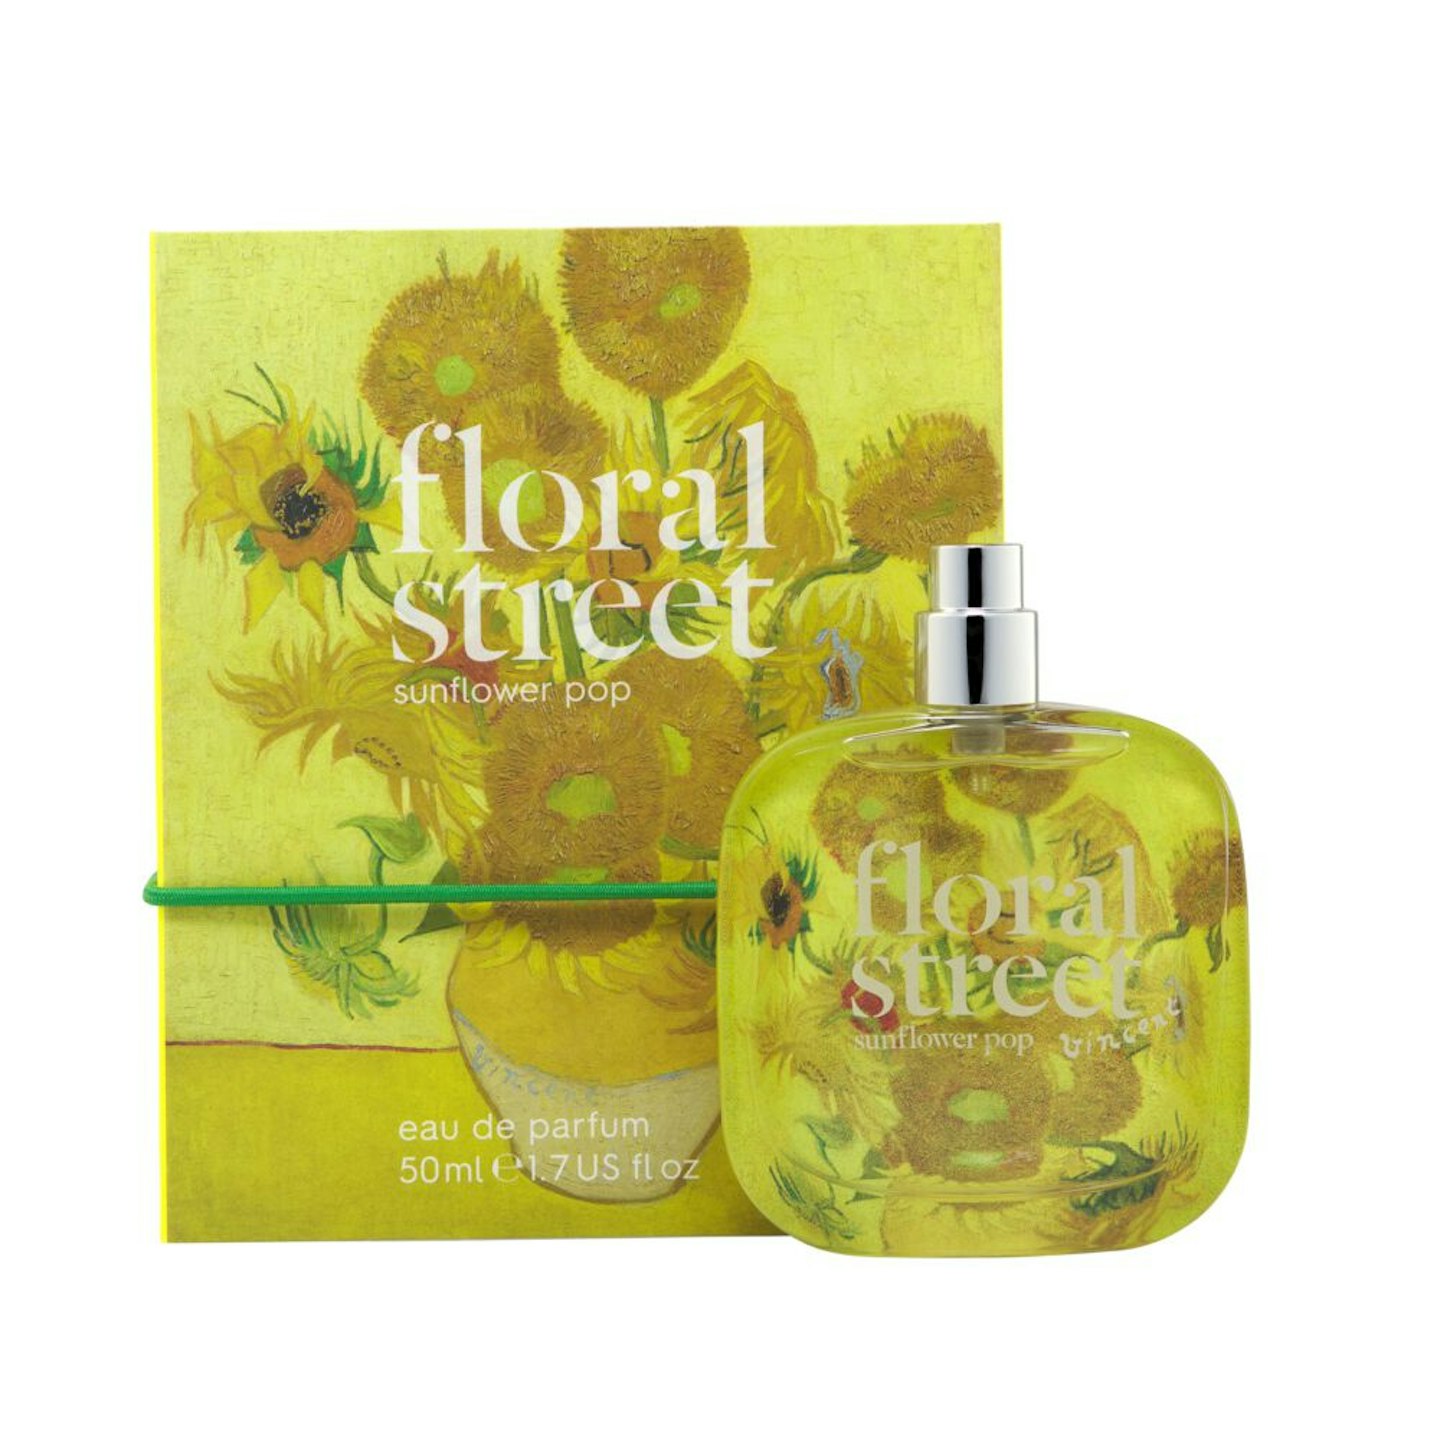 Floral Street, SunFlower Pop Eau De Perfume, £24